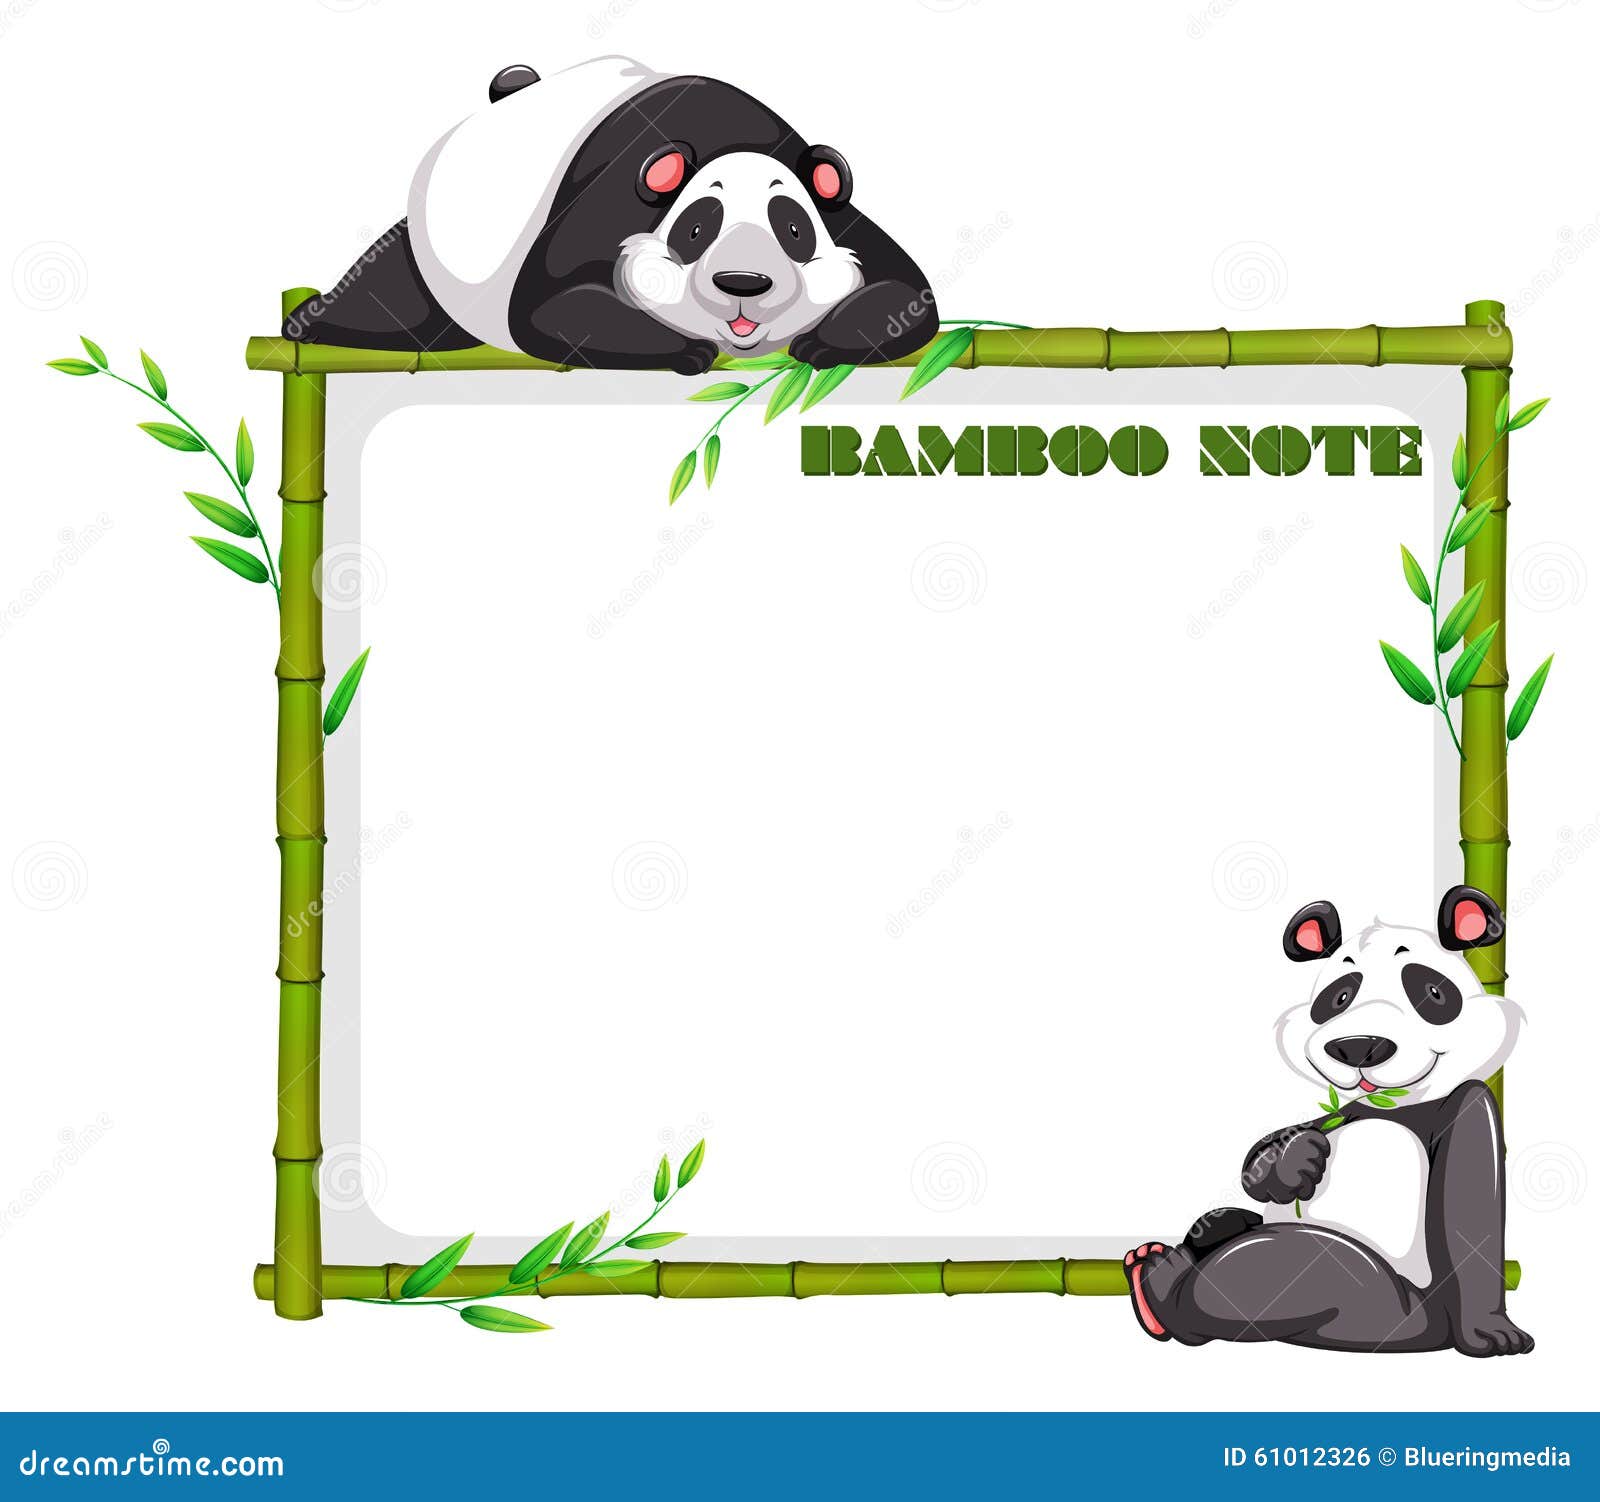 clipart panda frames - photo #23